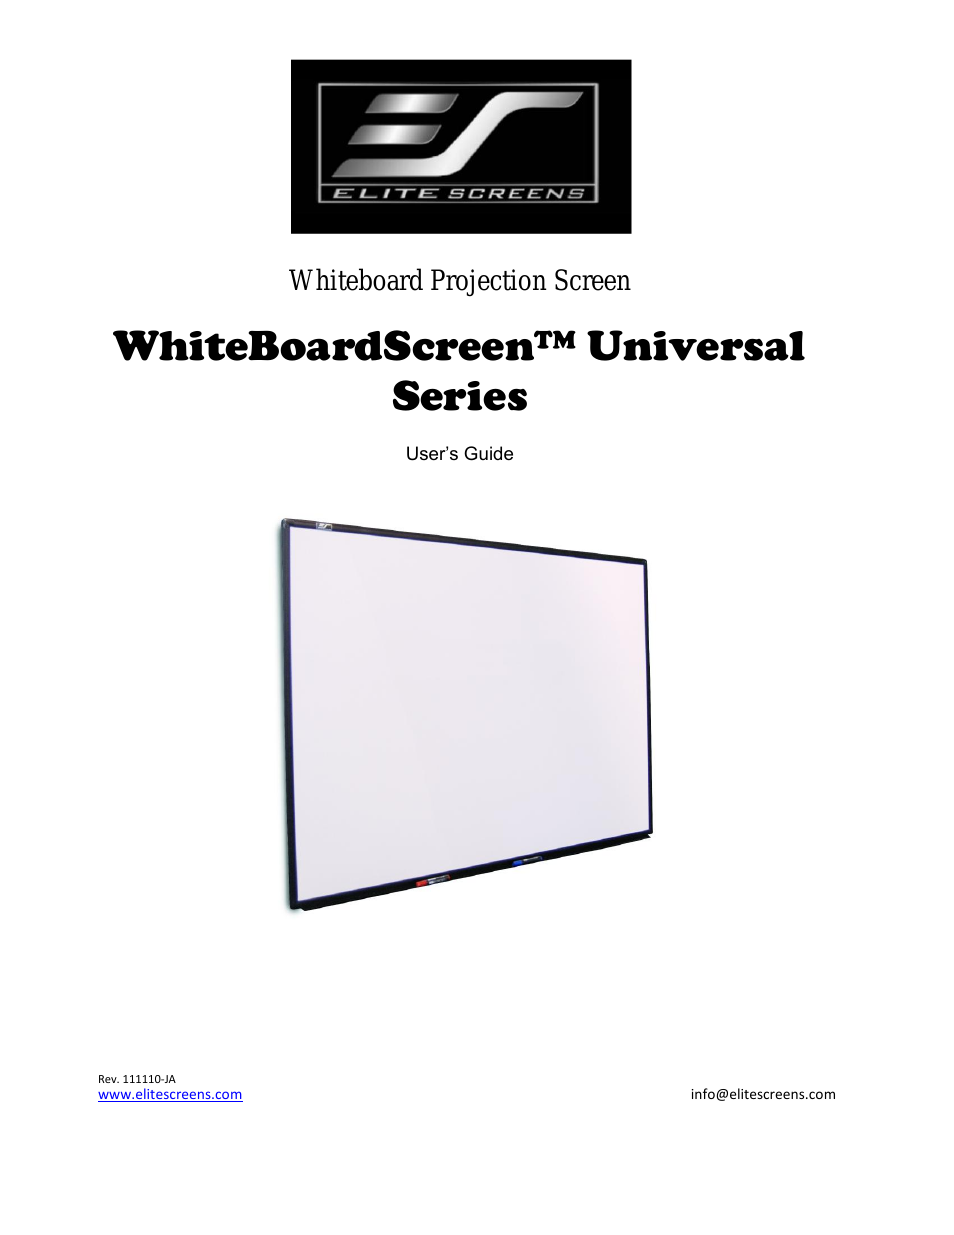 WhiteBoardScreen Universal